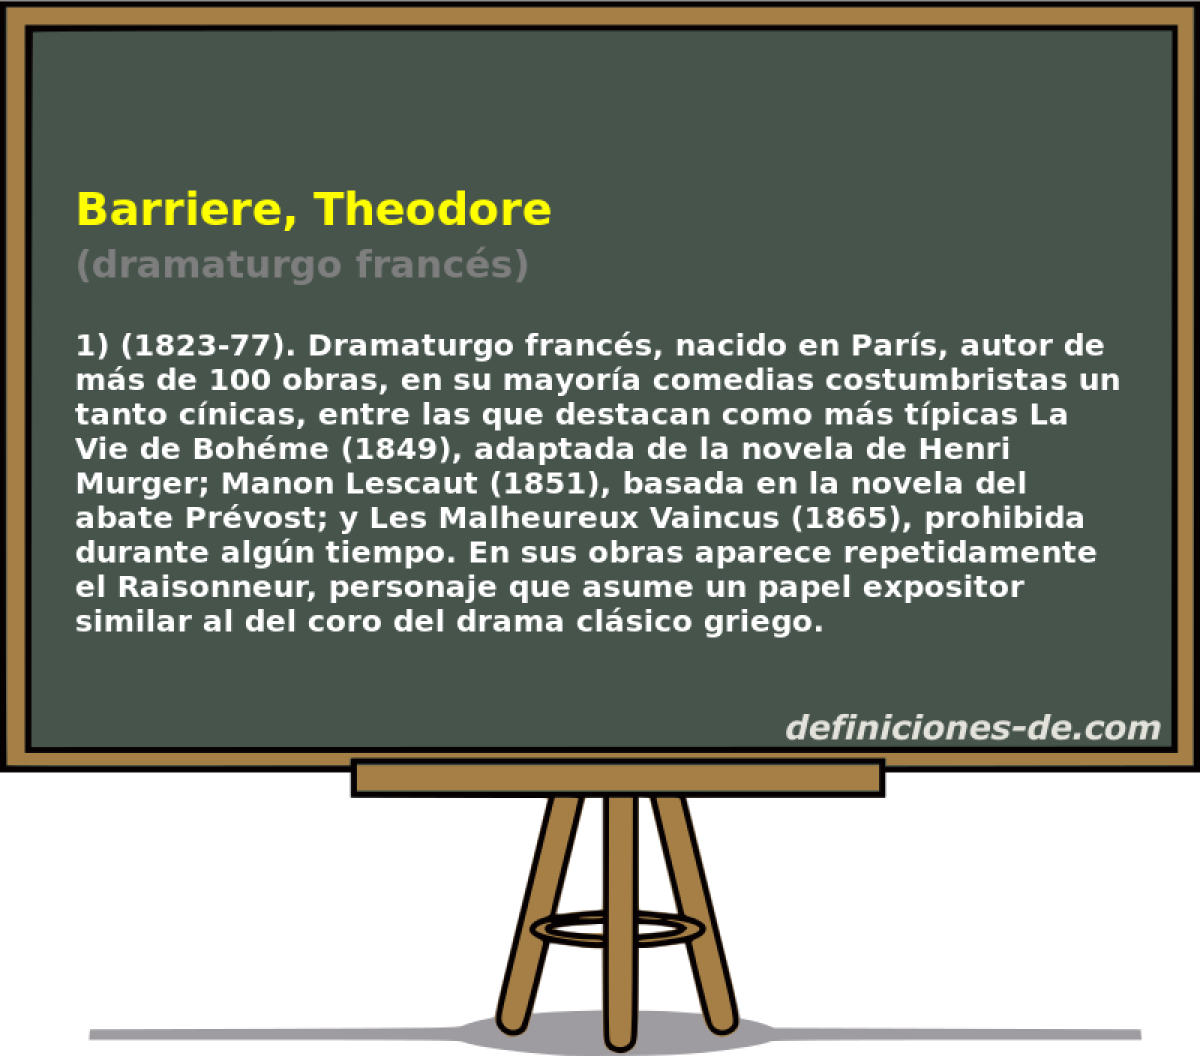 Barriere, Theodore (dramaturgo francs)